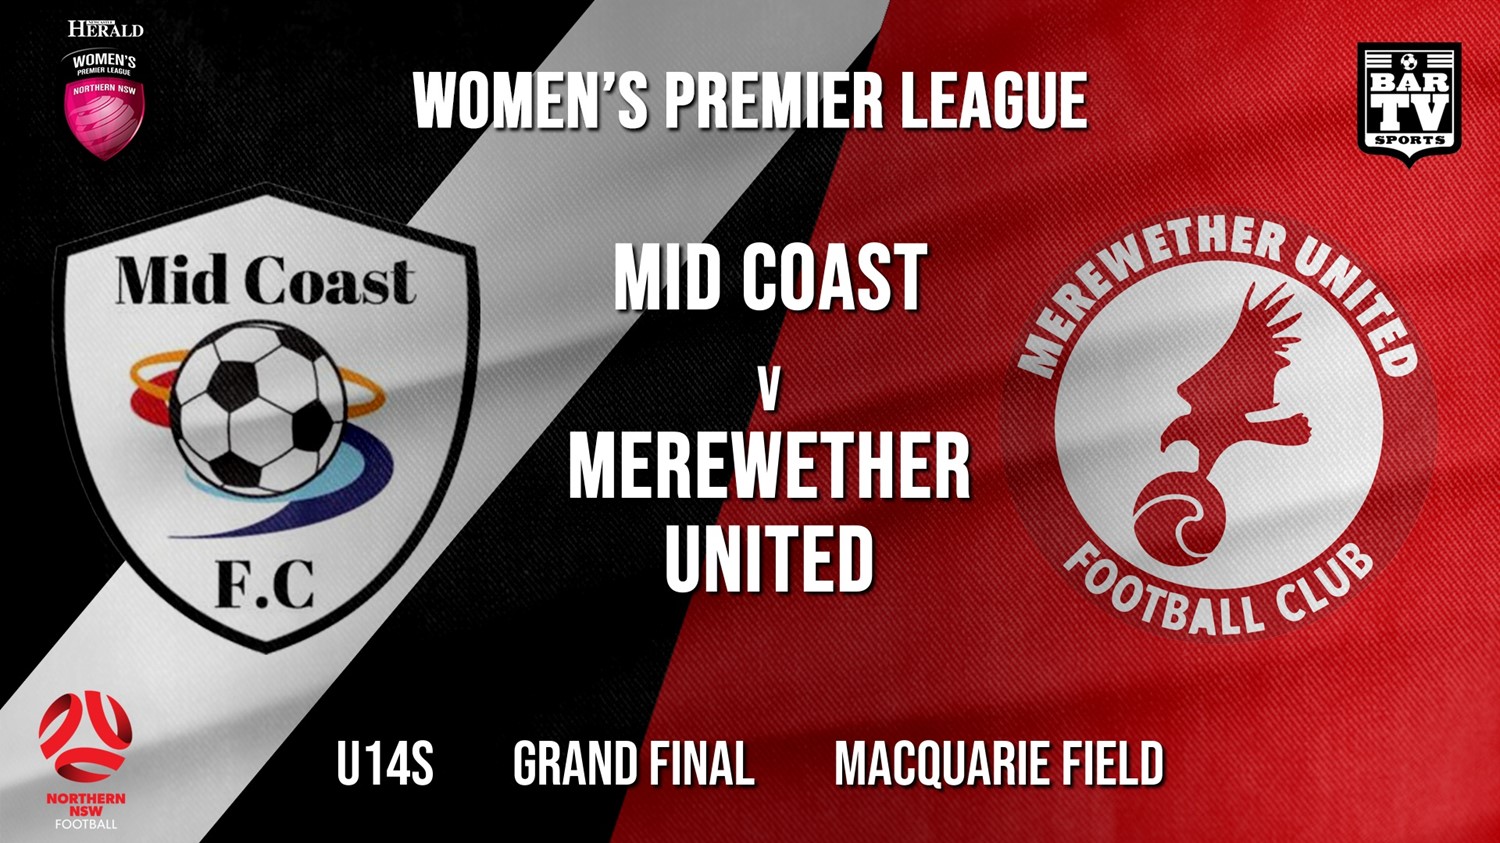 Herald Women’s Premier League Grand Final - U14s - Mid Coast v Merewether United (Womens) Minigame Slate Image